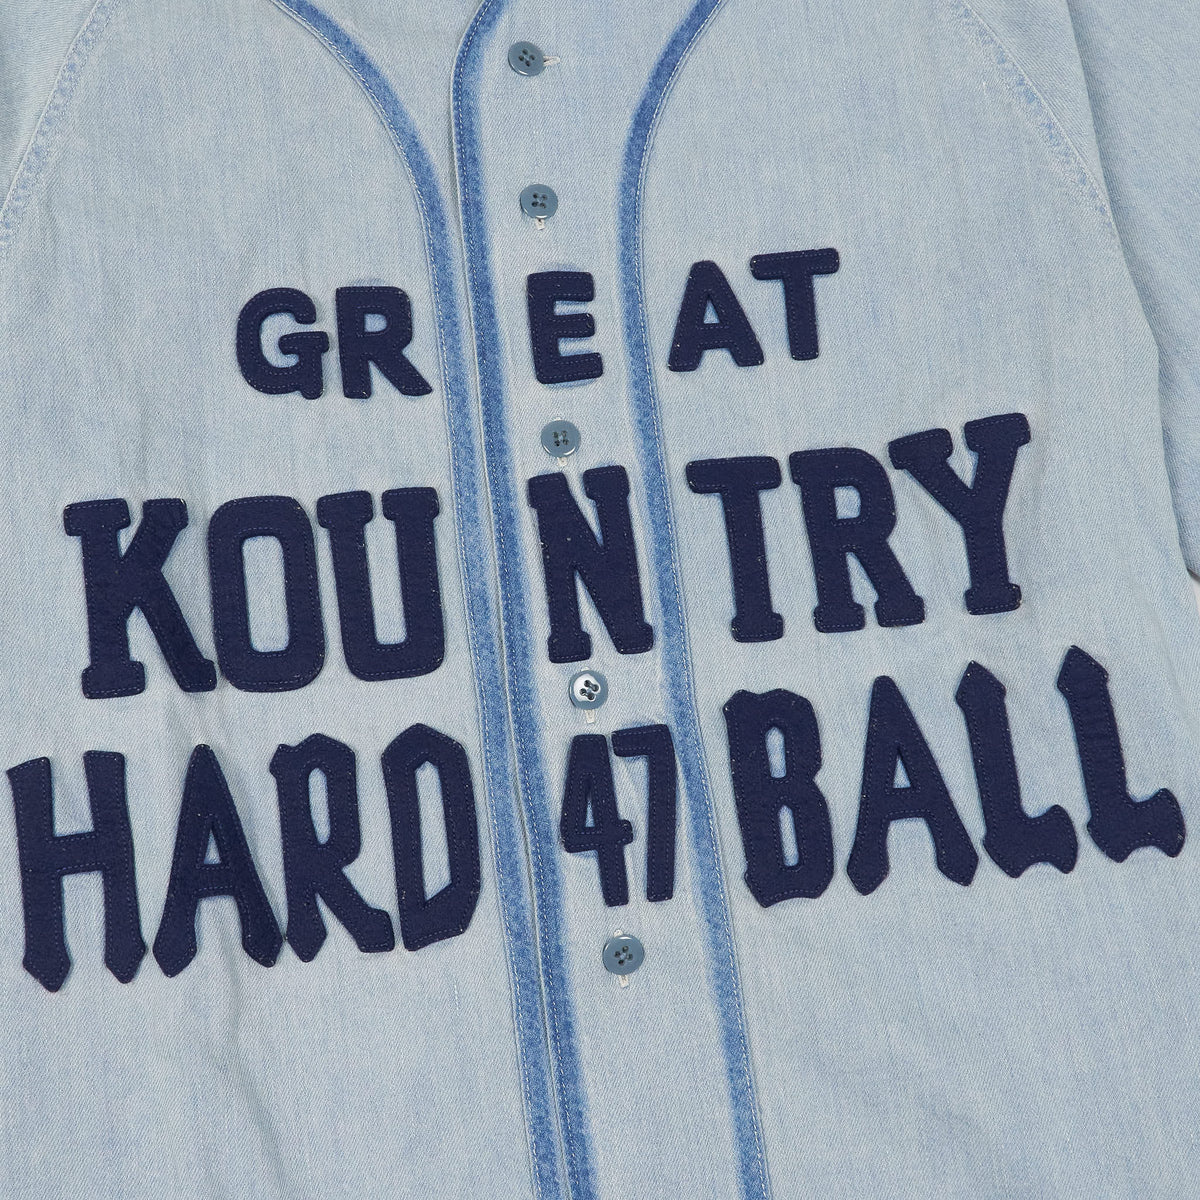 Kapital Baseball Great Kountry Hard Ball 47 Shirt